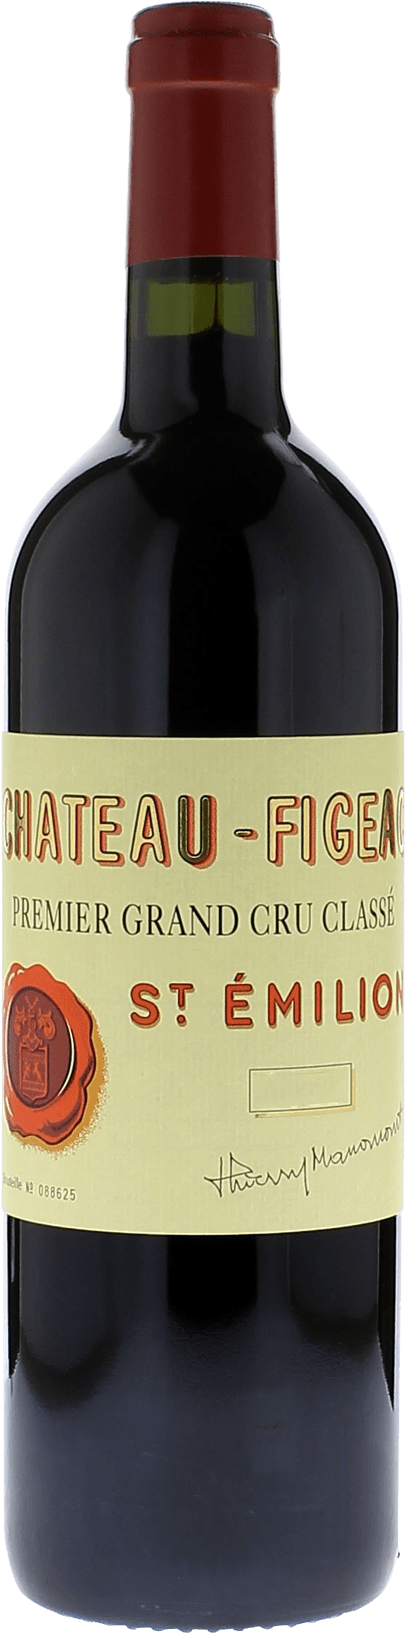 Figeac 1995 1er Grand cru B class Saint-Emilion, Bordeaux rouge